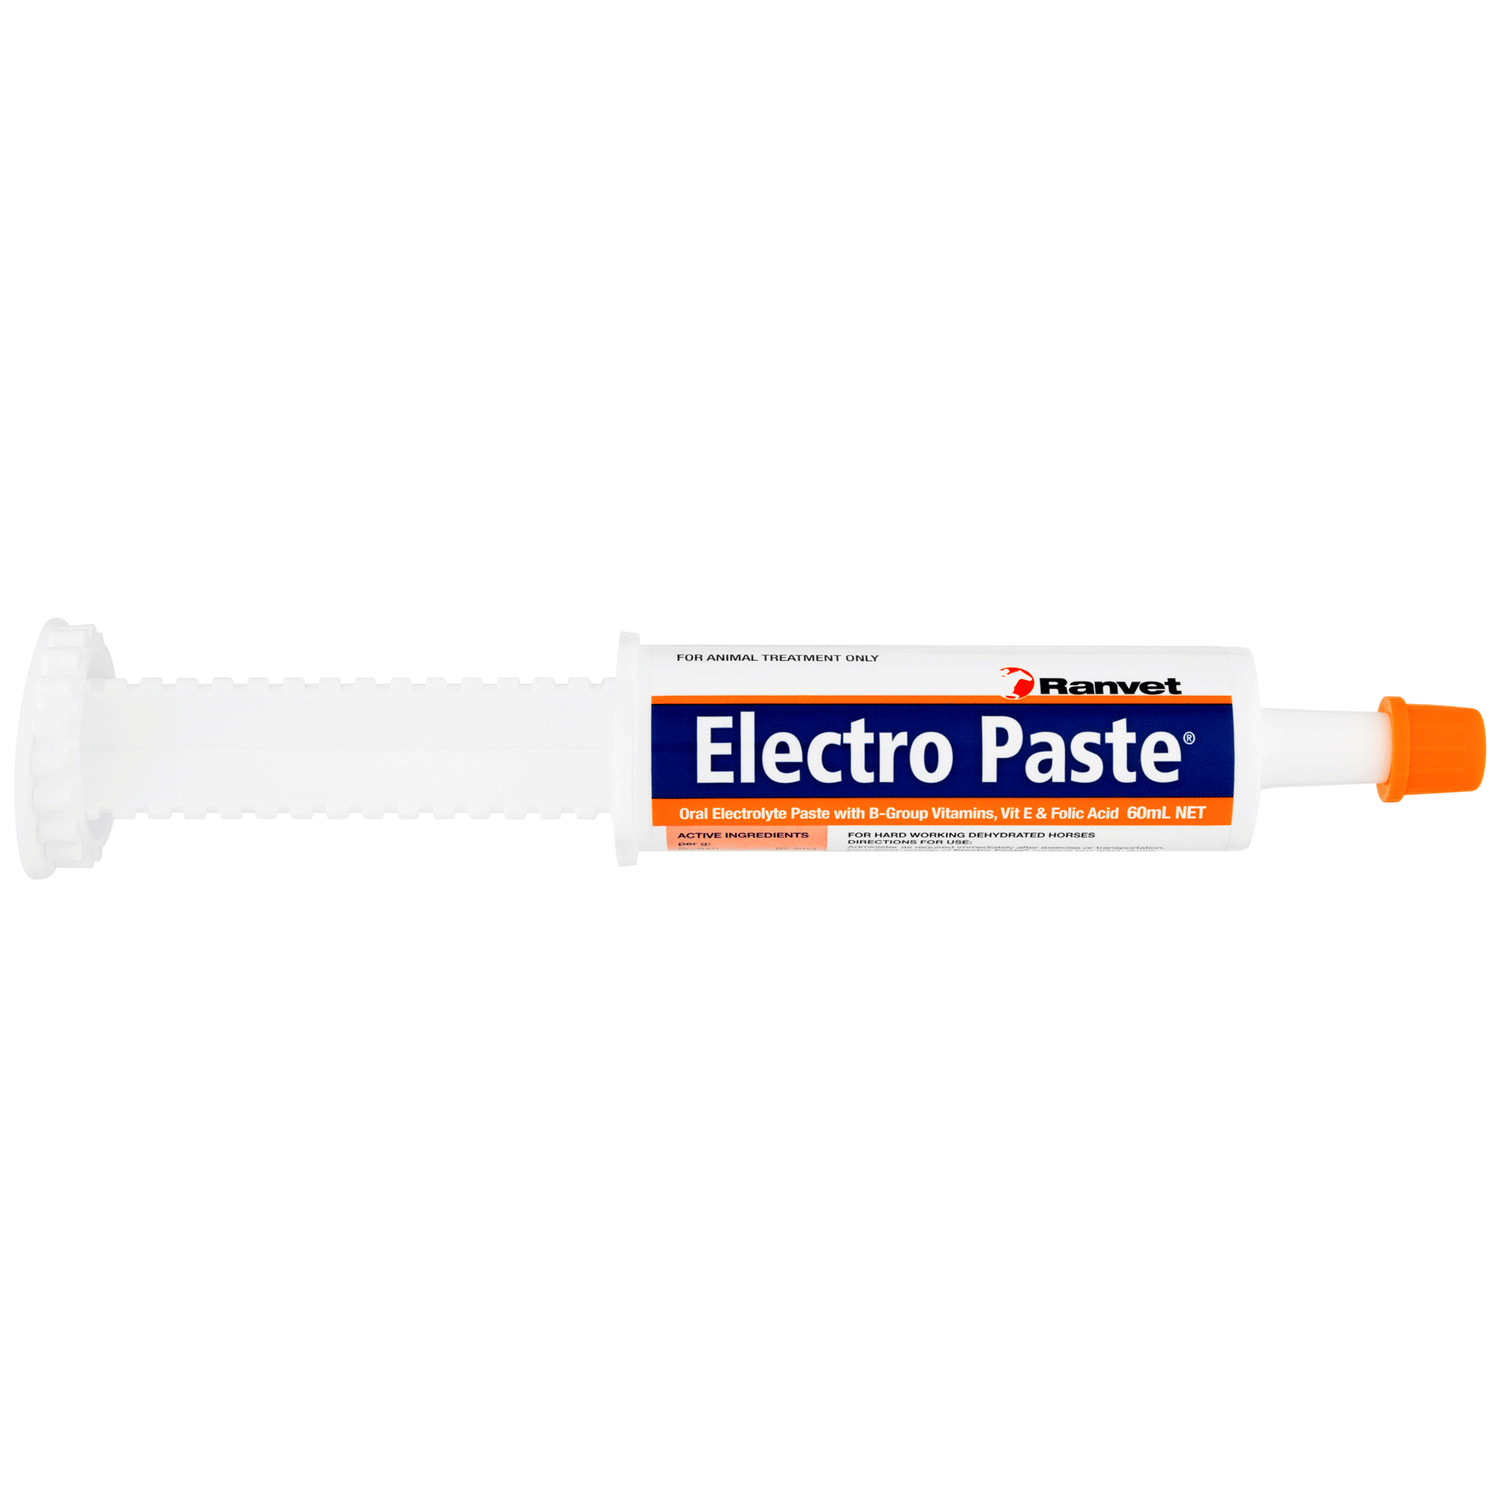 Electro Paste 60ml (Ranvet)